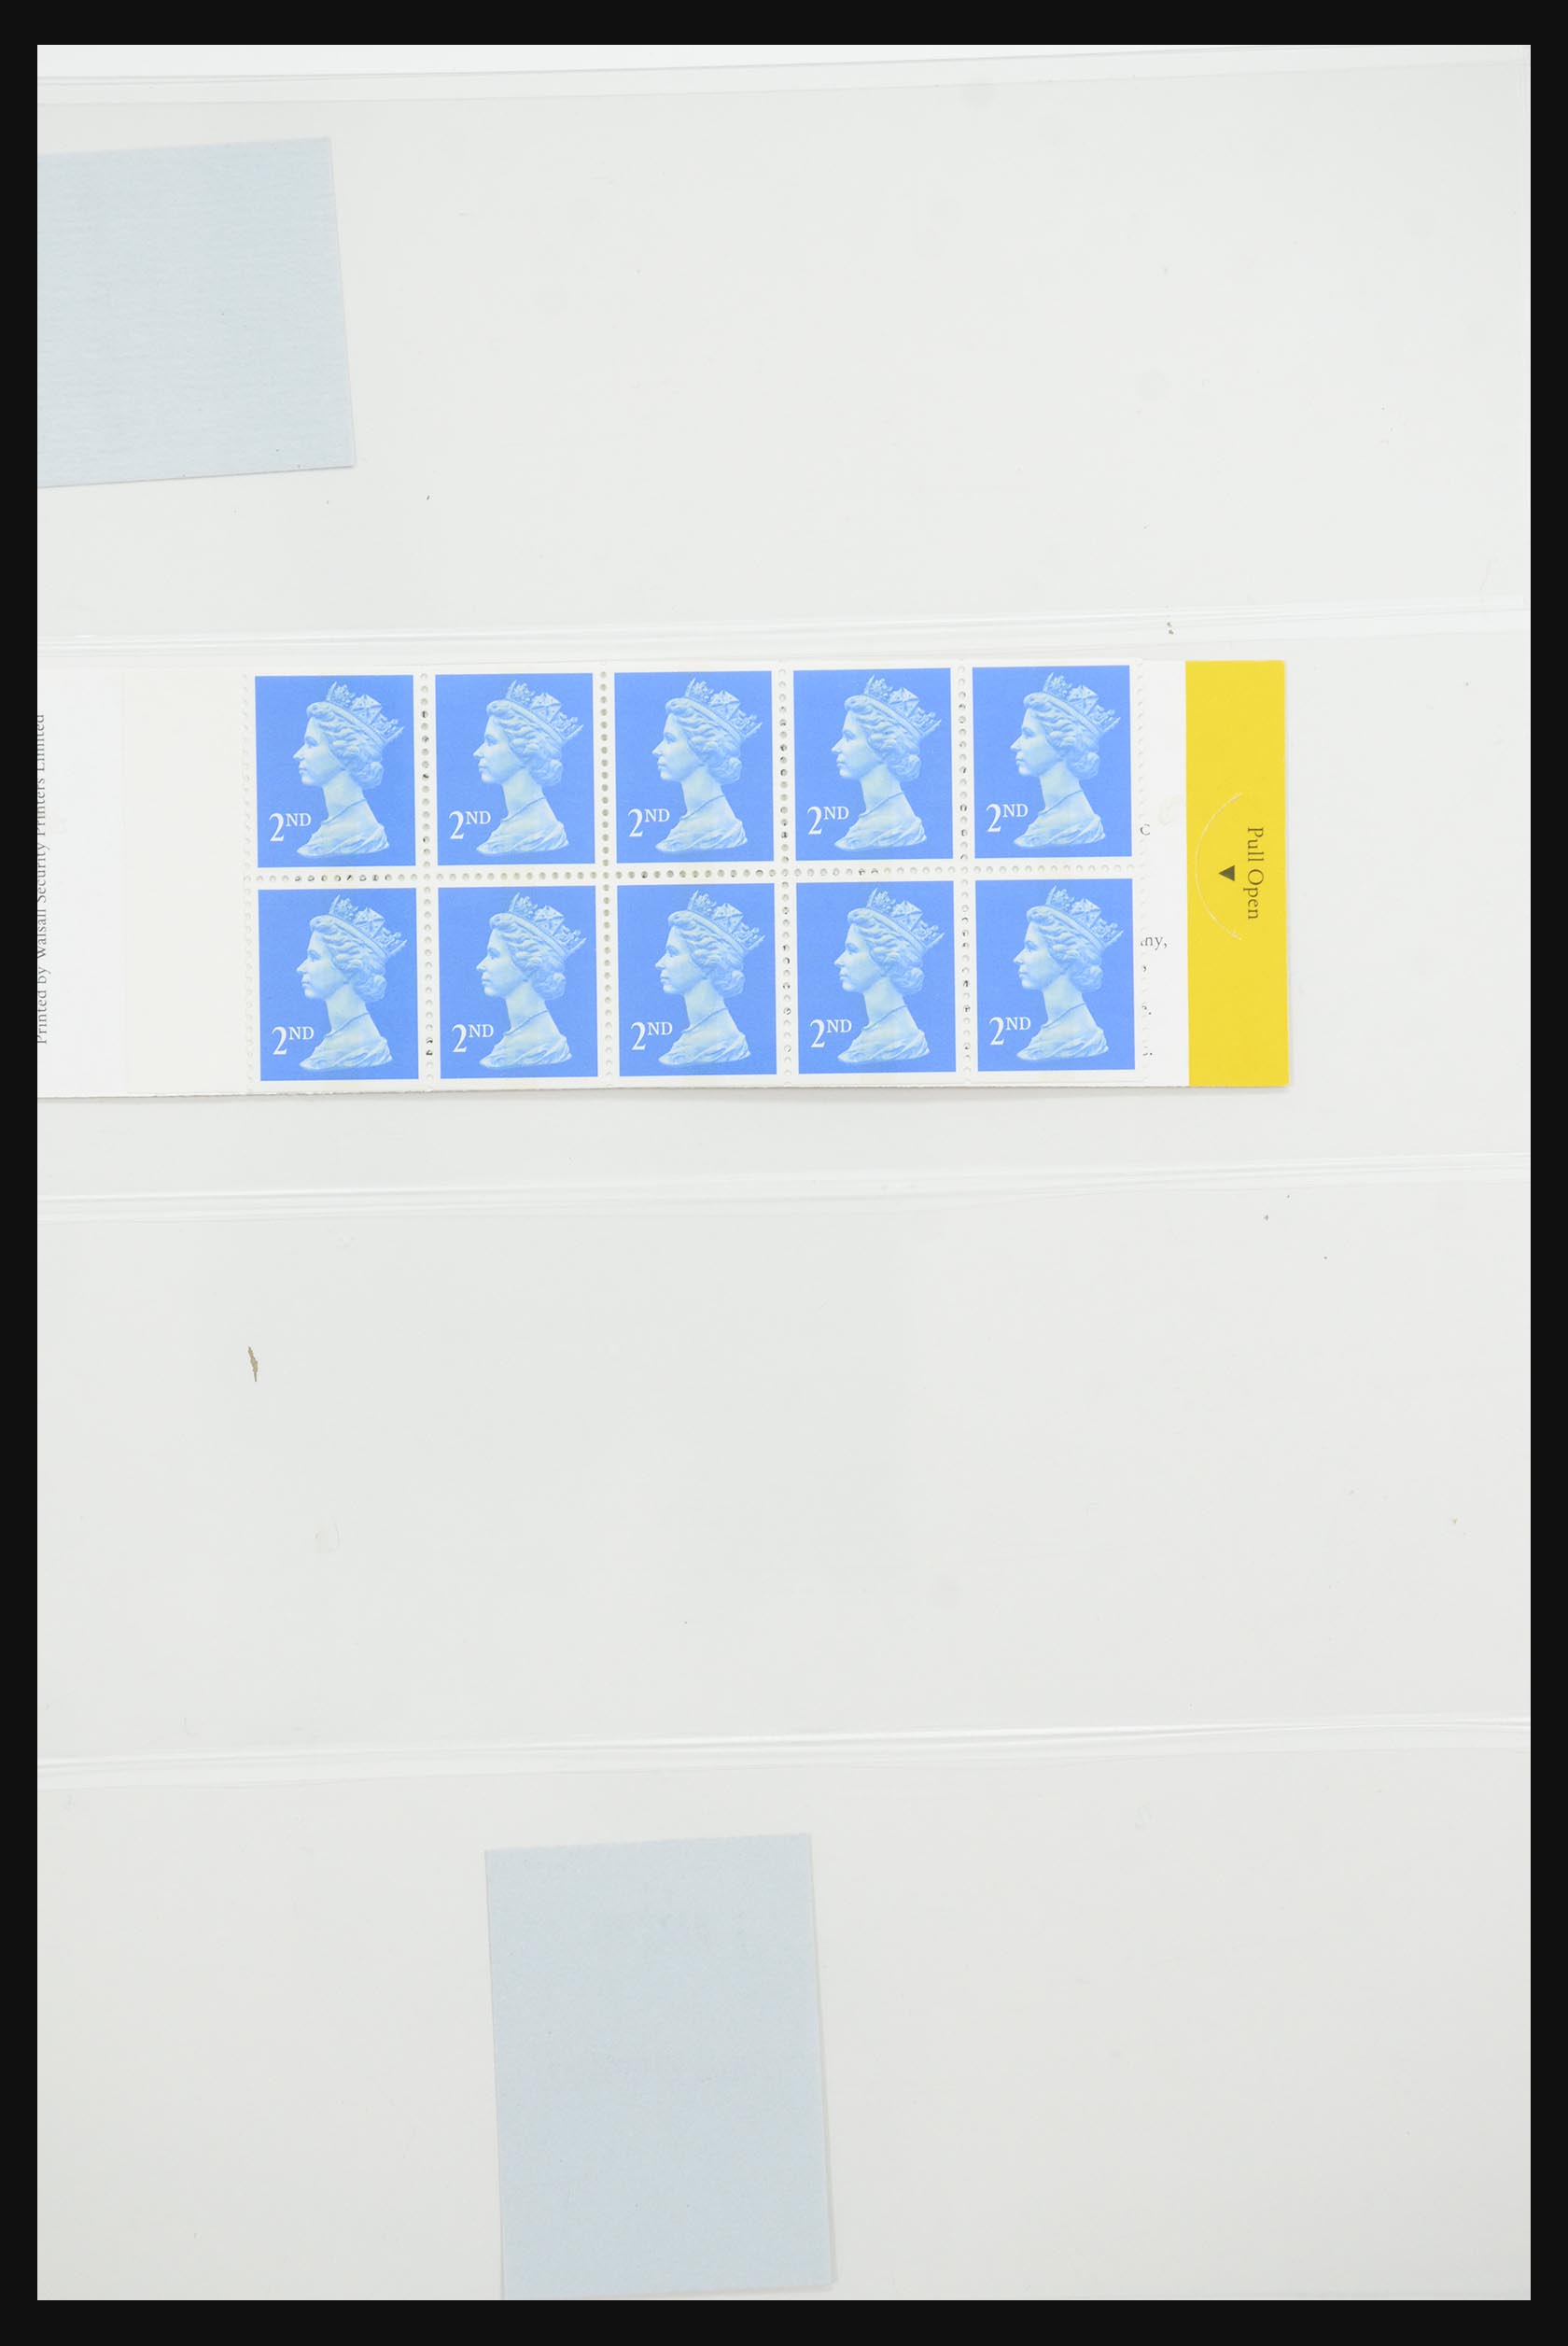 31960 070 - 31960 Great Britain stampbooklets 1989-2000.